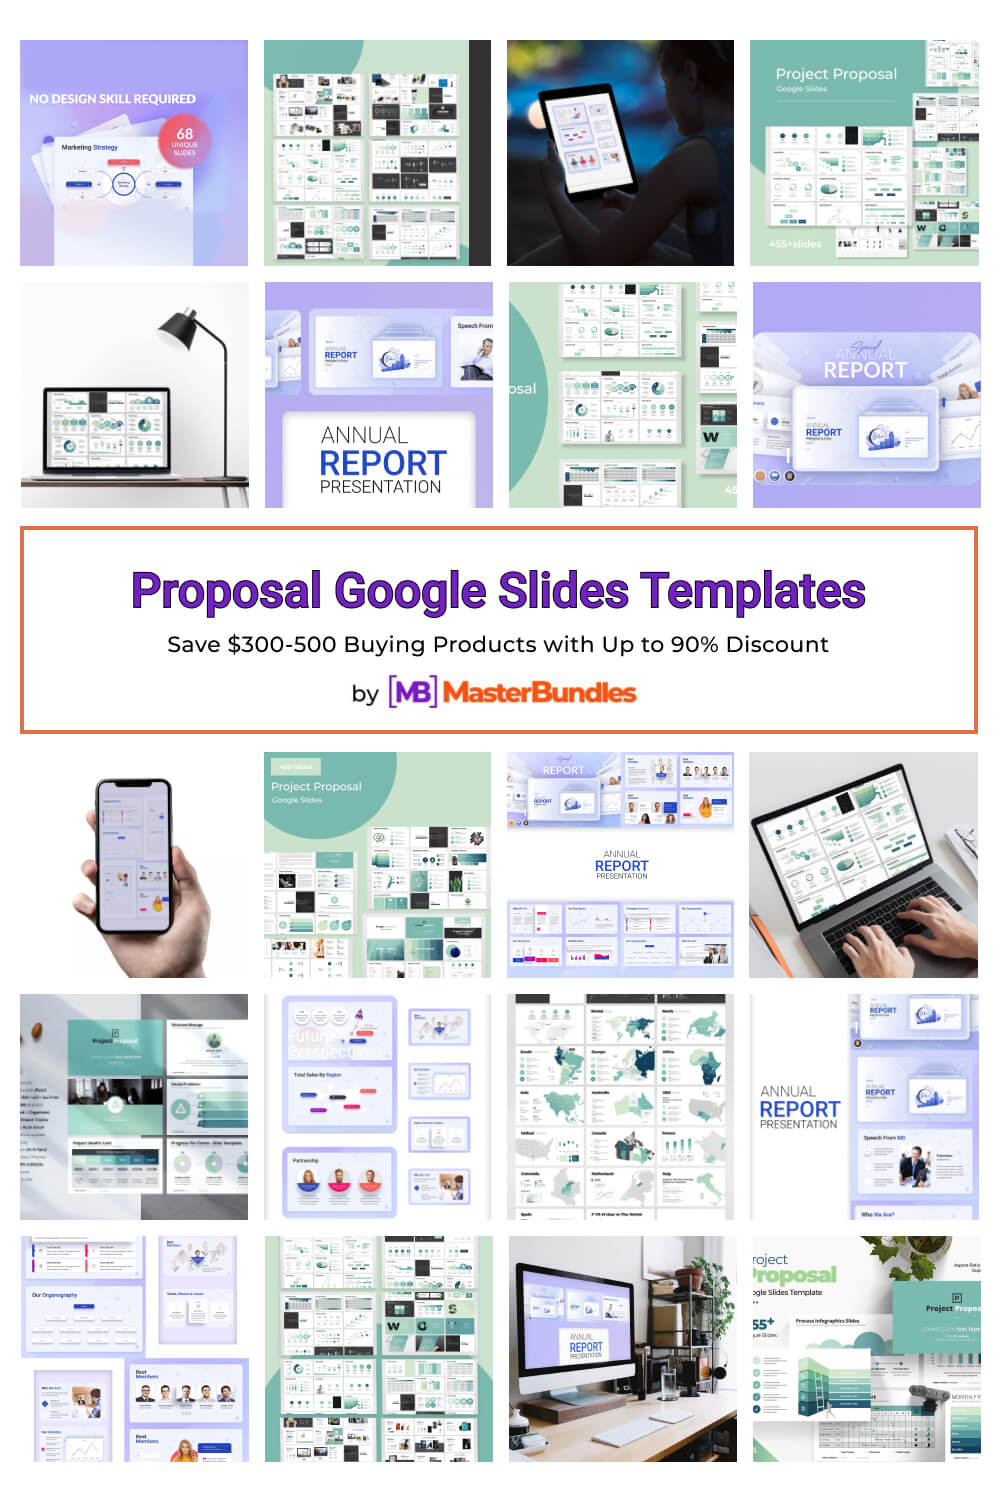 proposal google slides templates pinterest image.